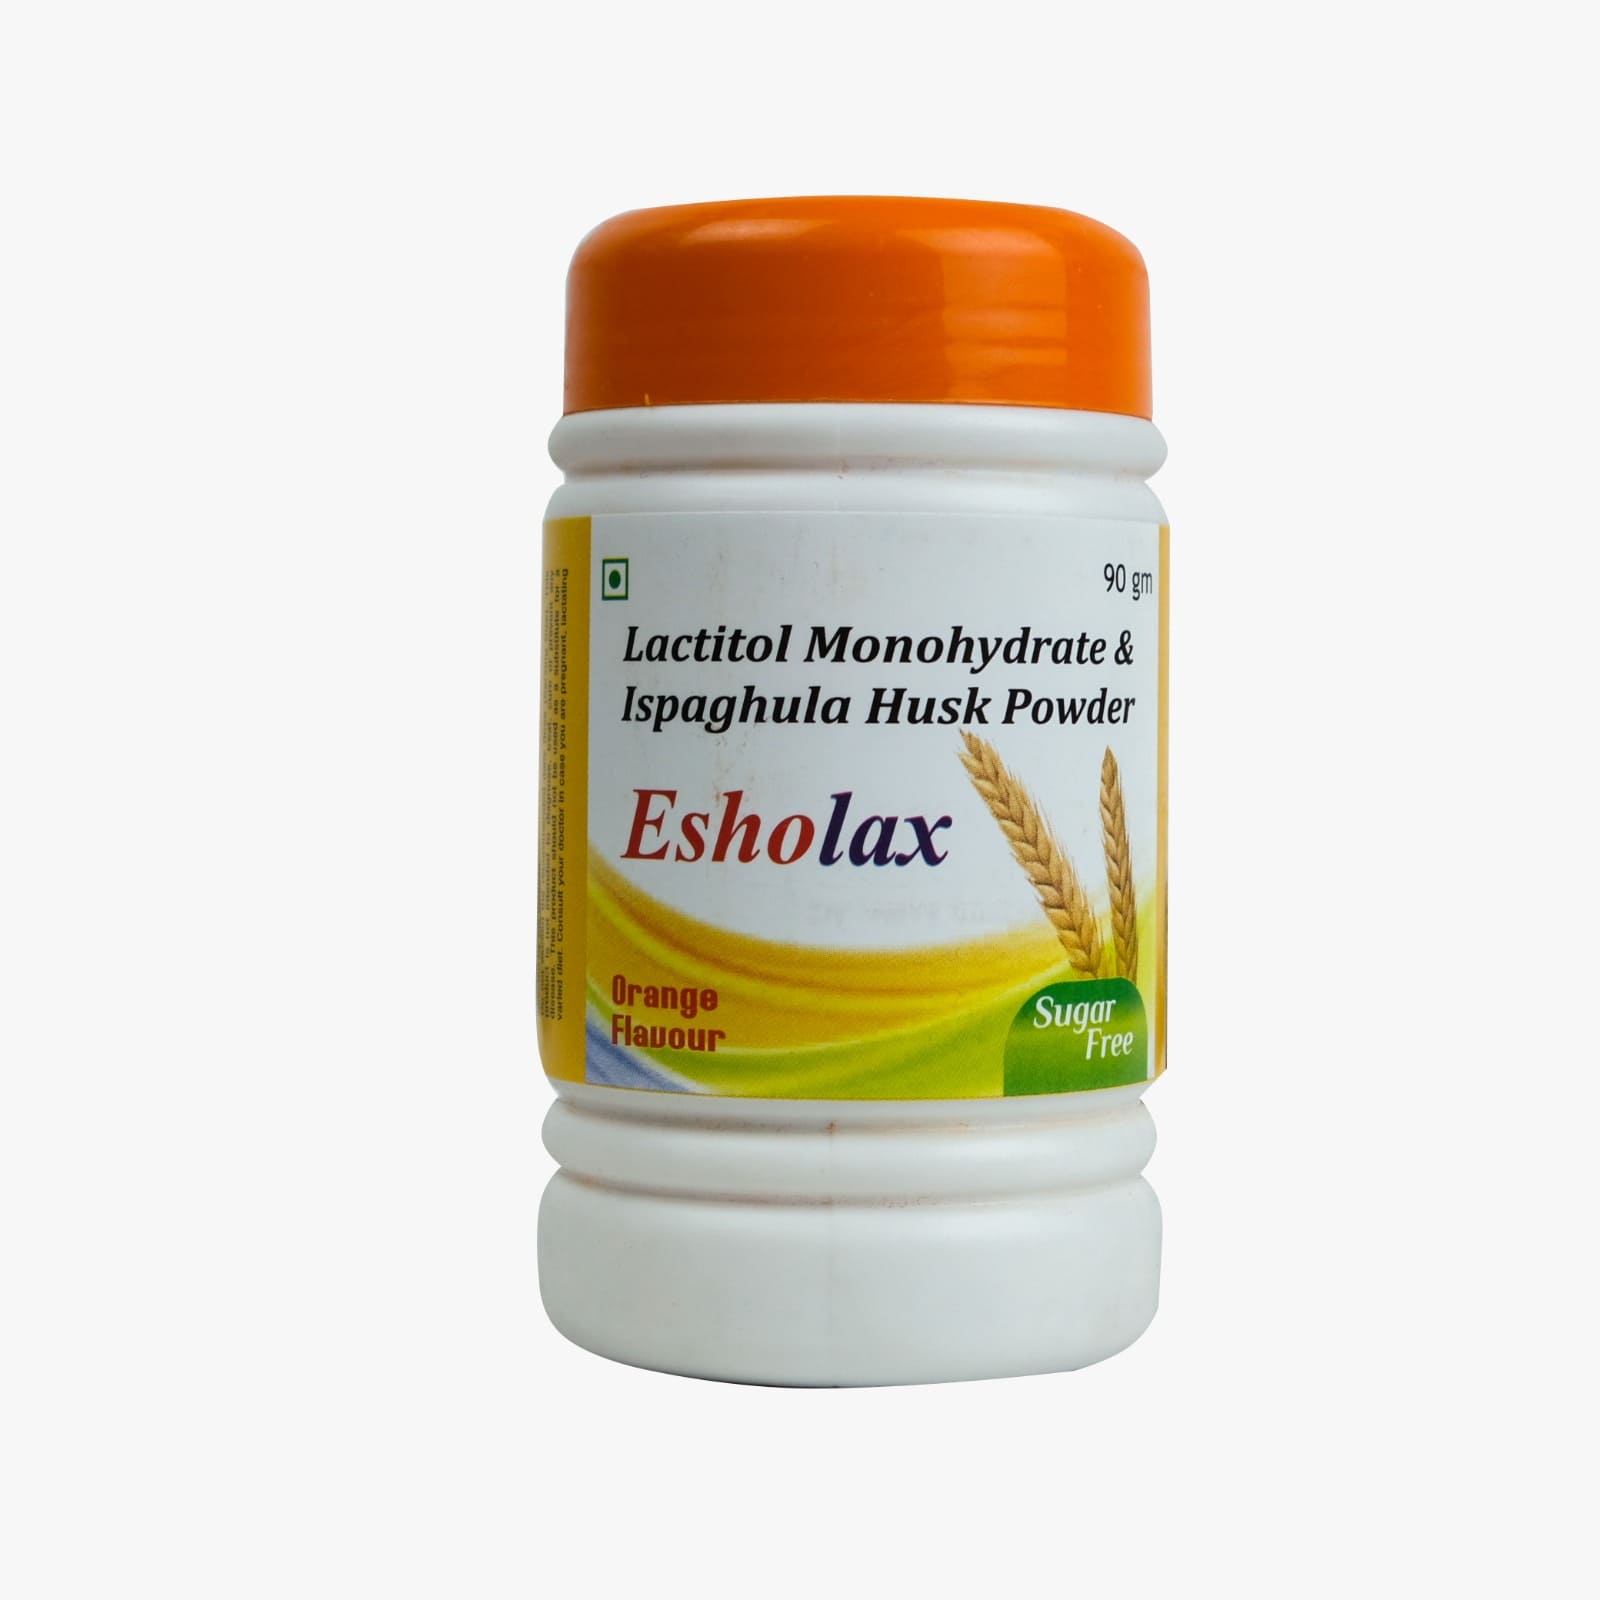 Lactitol Monohydrate and Ispaghula Husk Powder